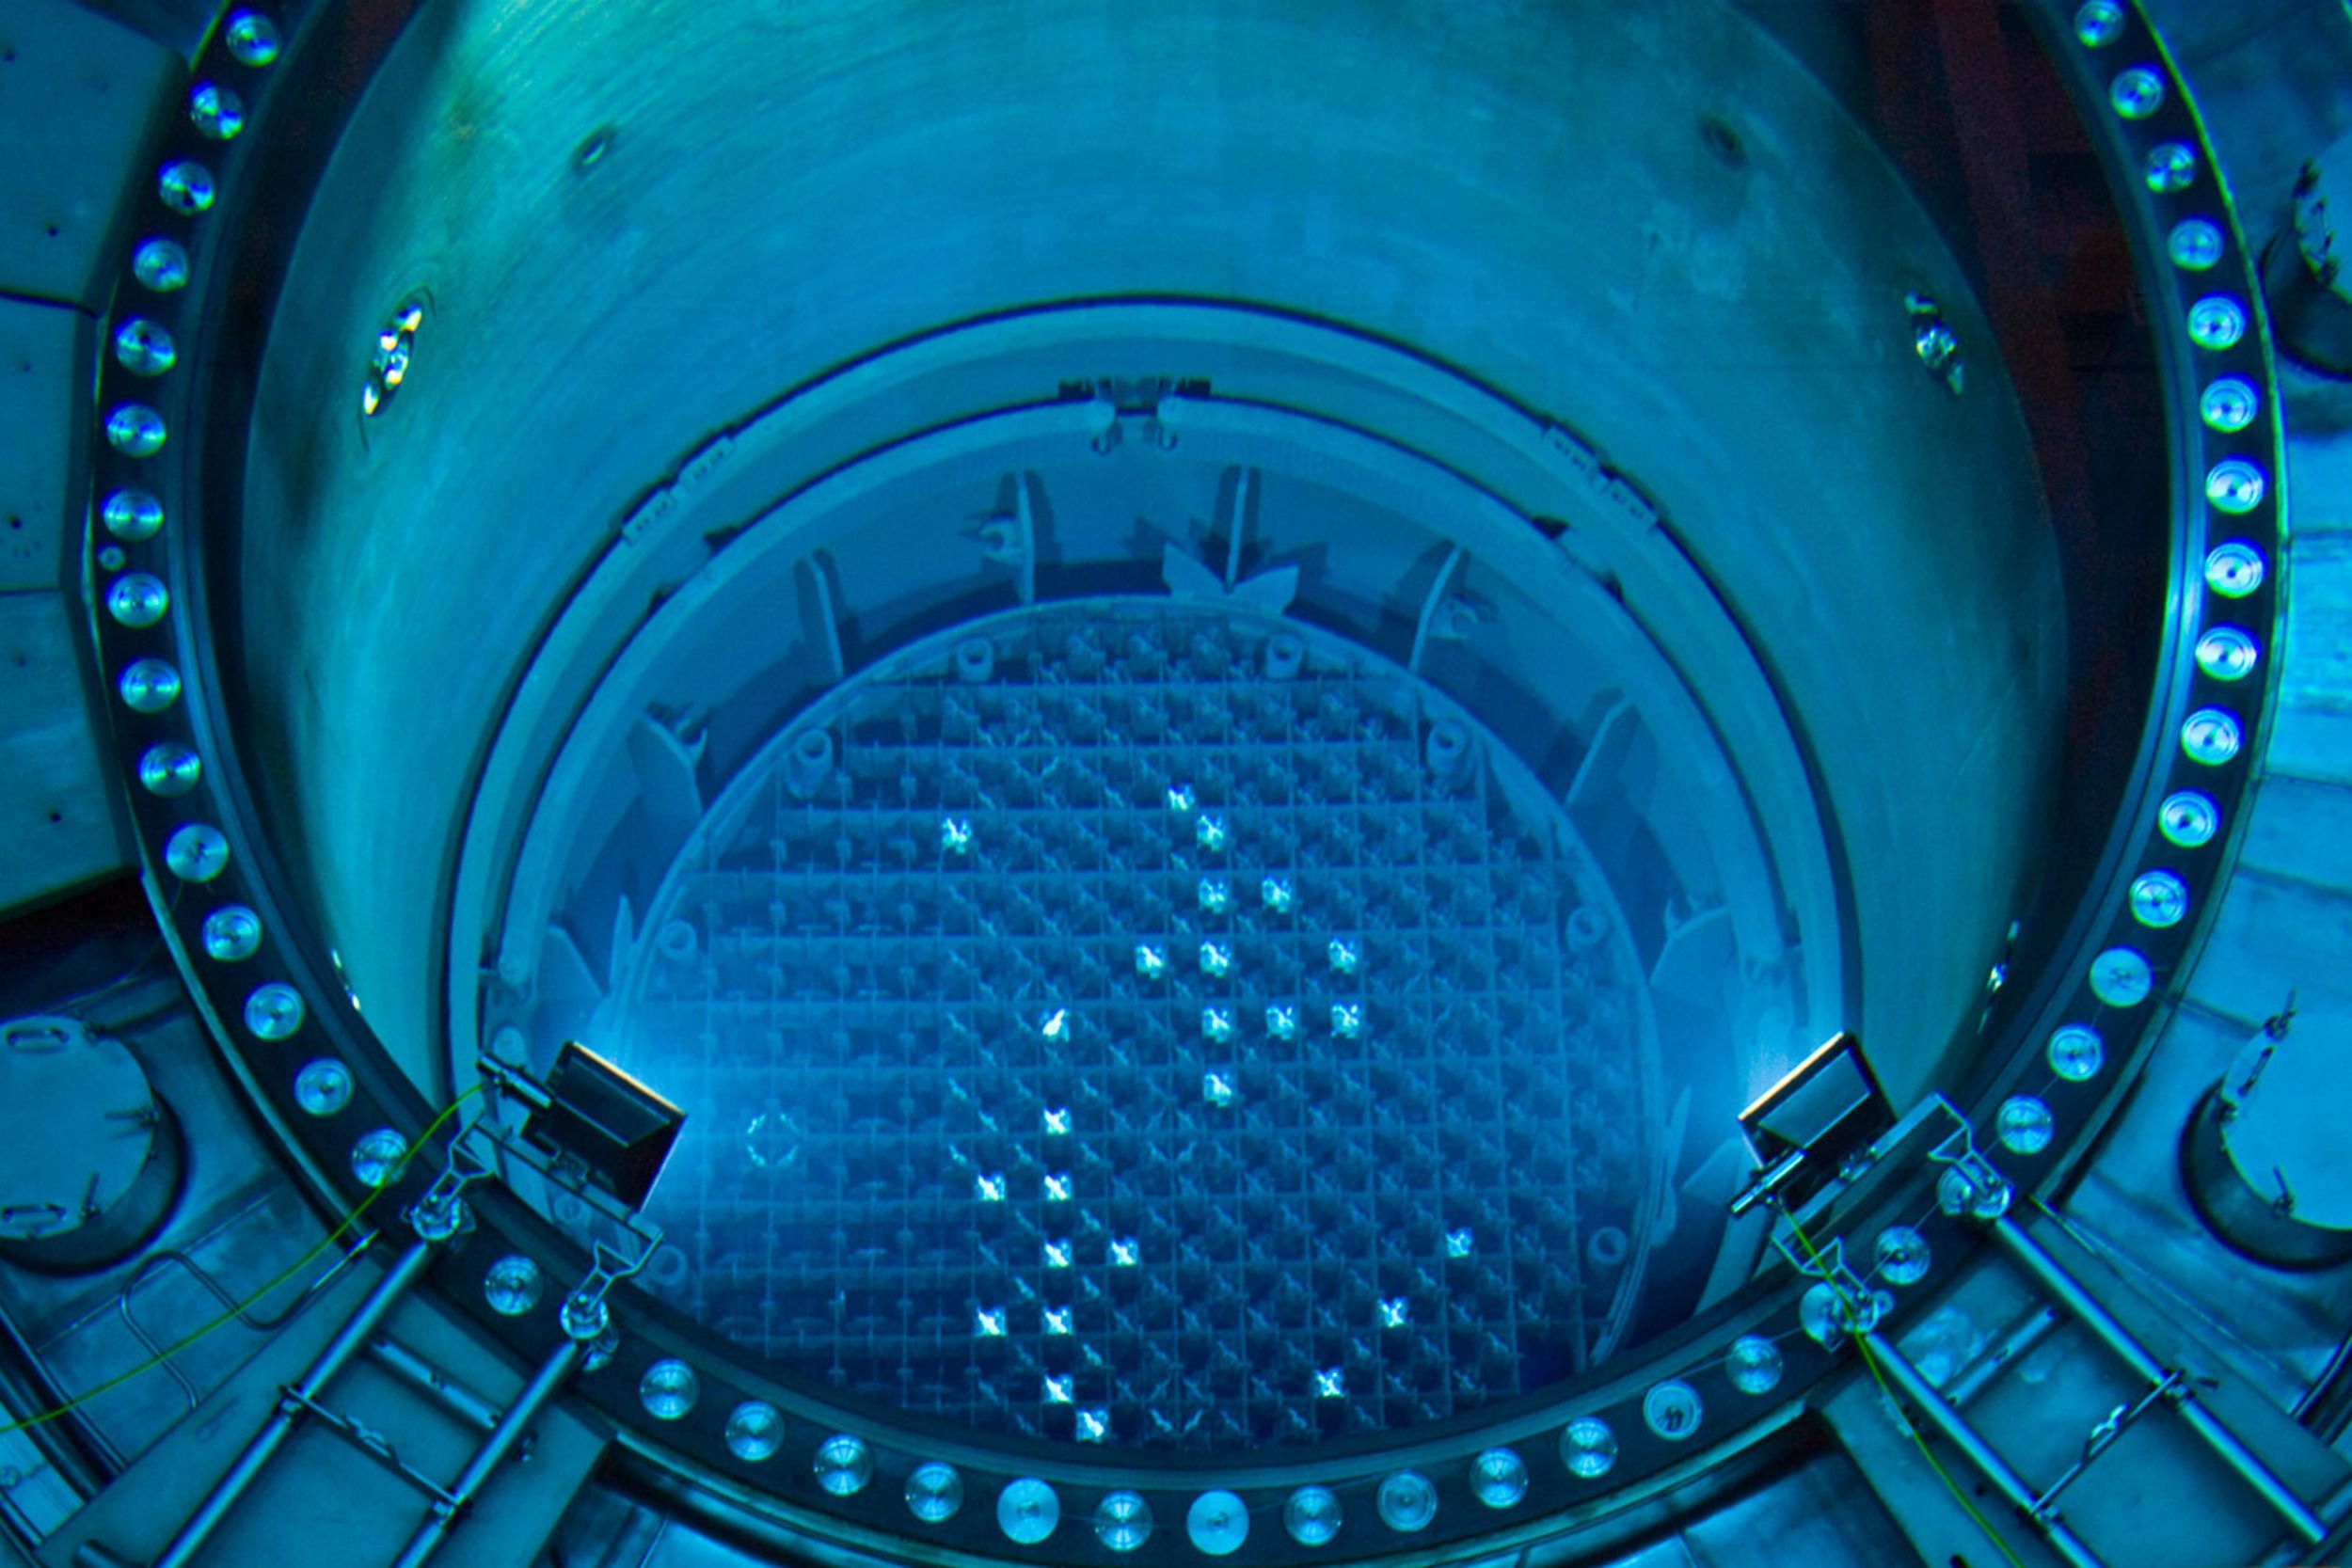 Nuclear Reactor Core. Nuclear power, Nuclear power plant, Nuclear reactor